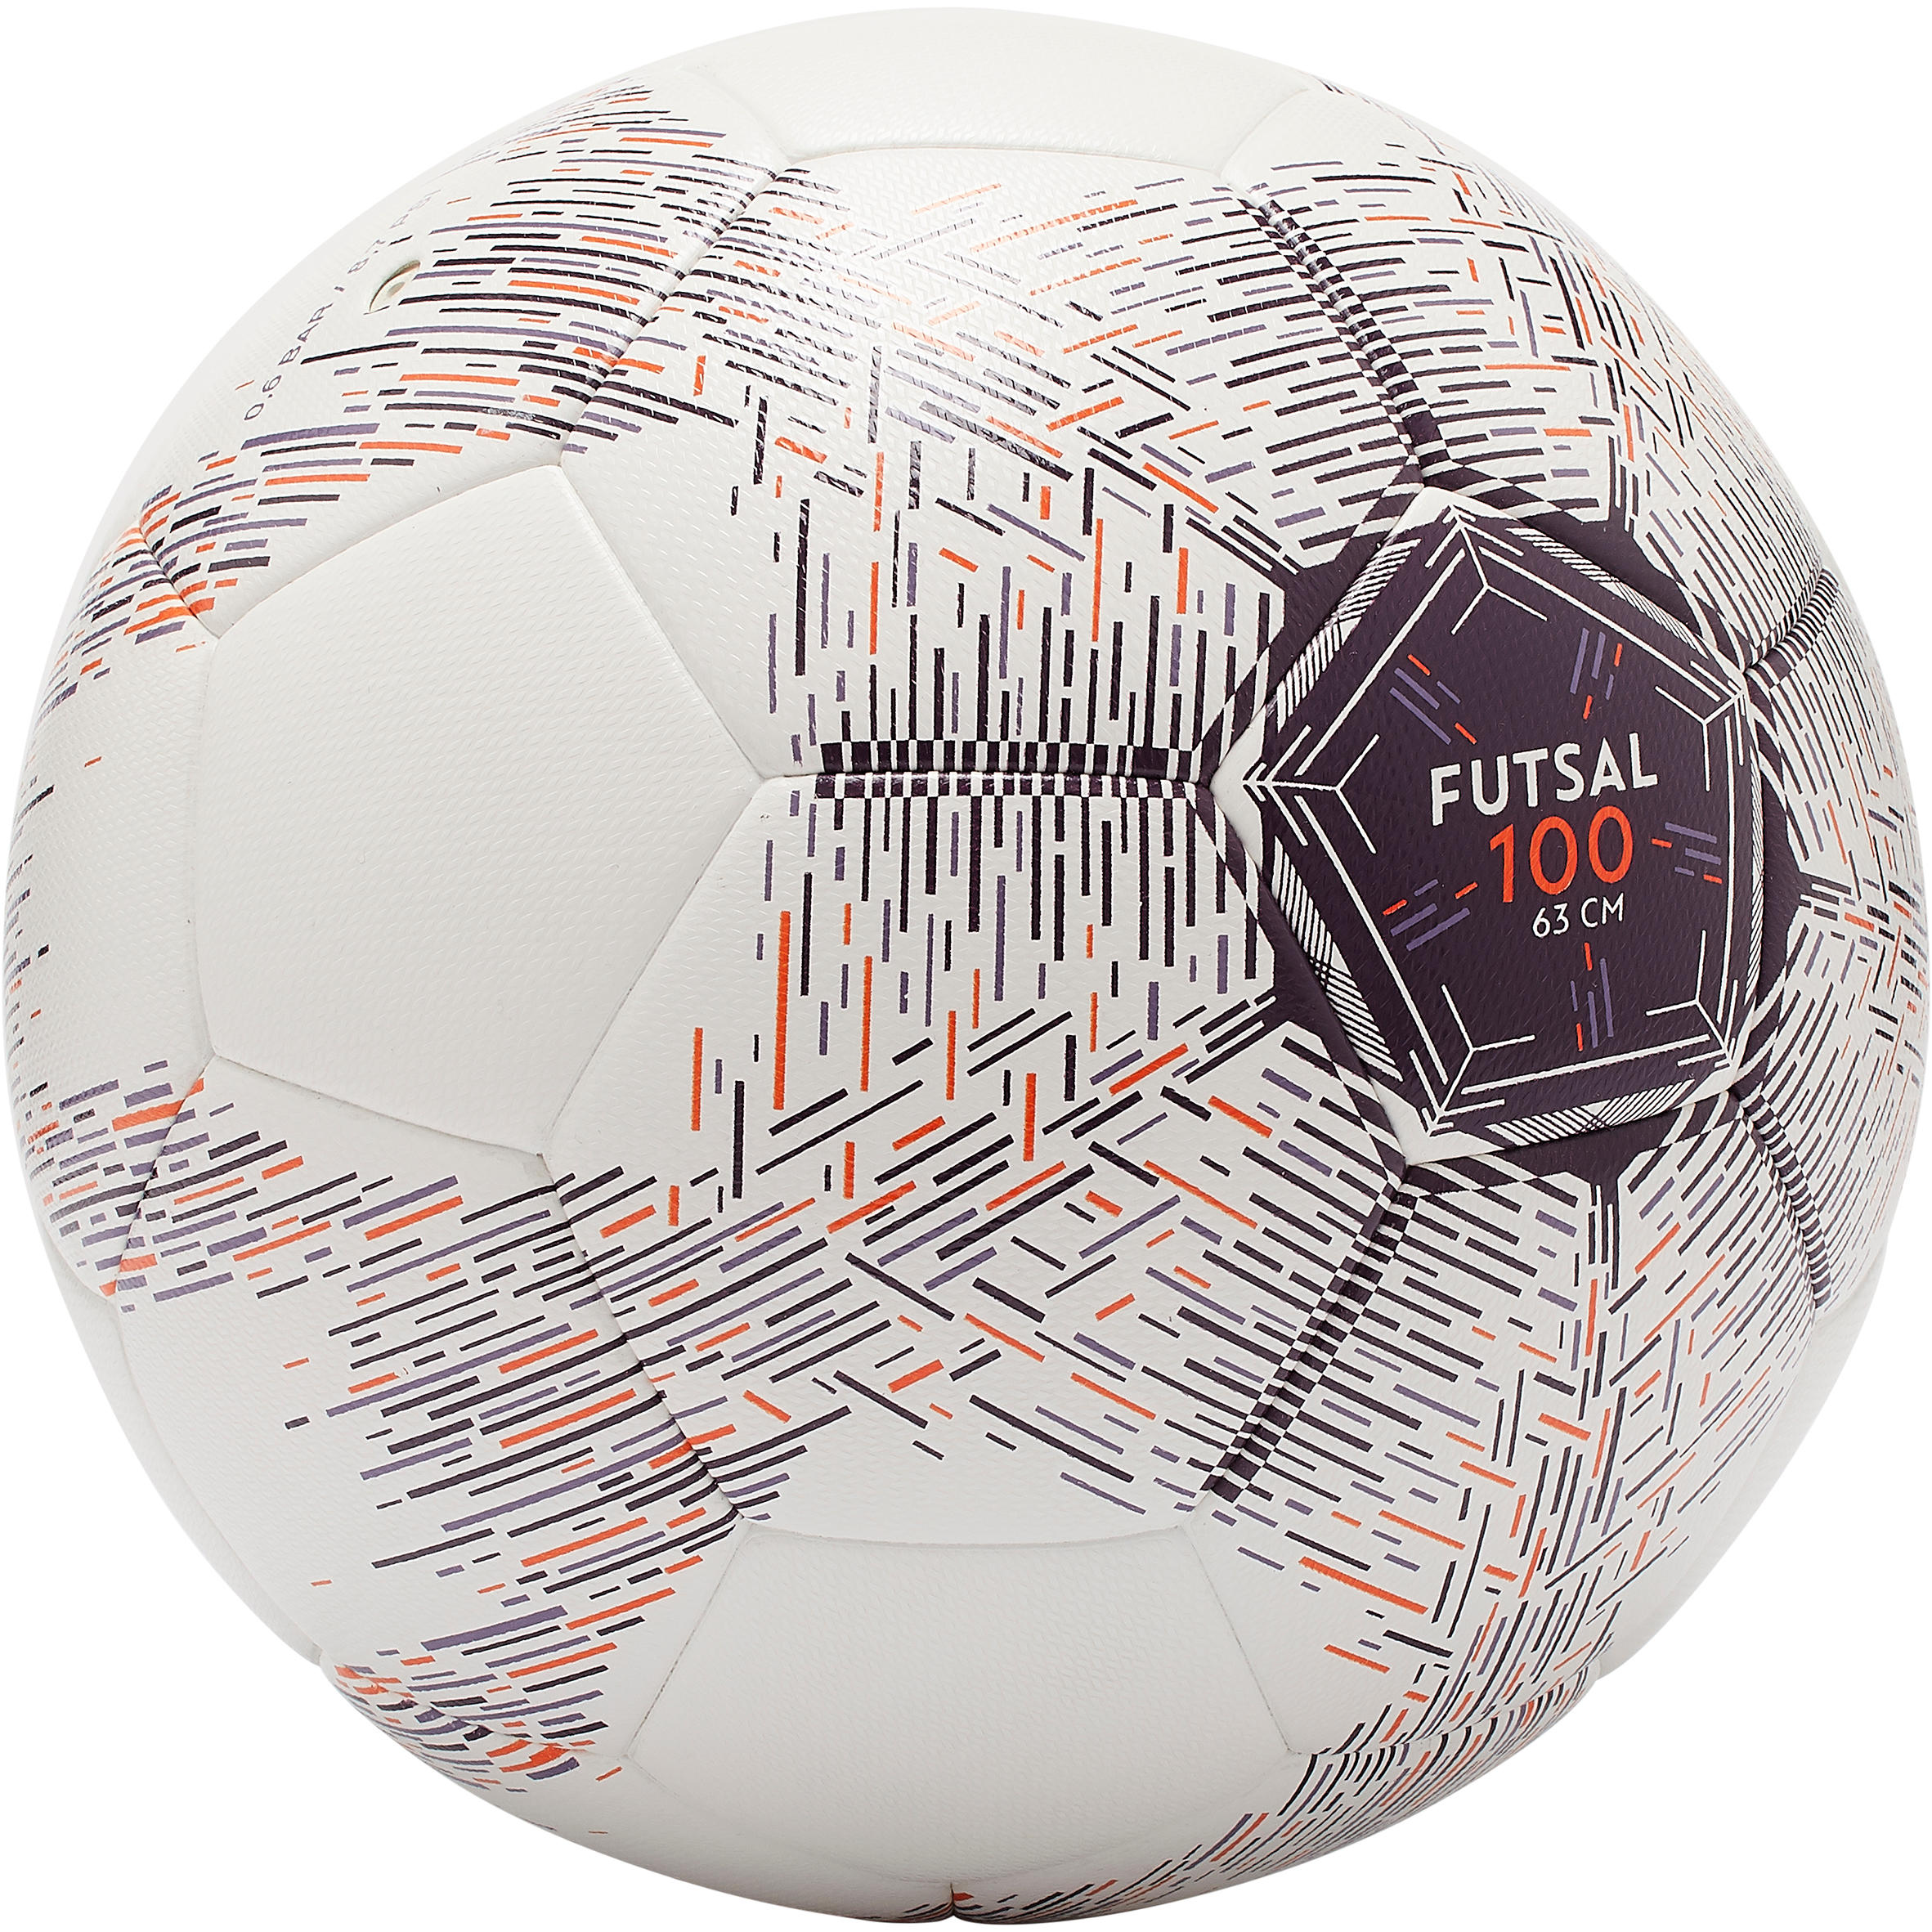 Minge Futsal 100 Hybride 63 cm Alb decathlon.ro